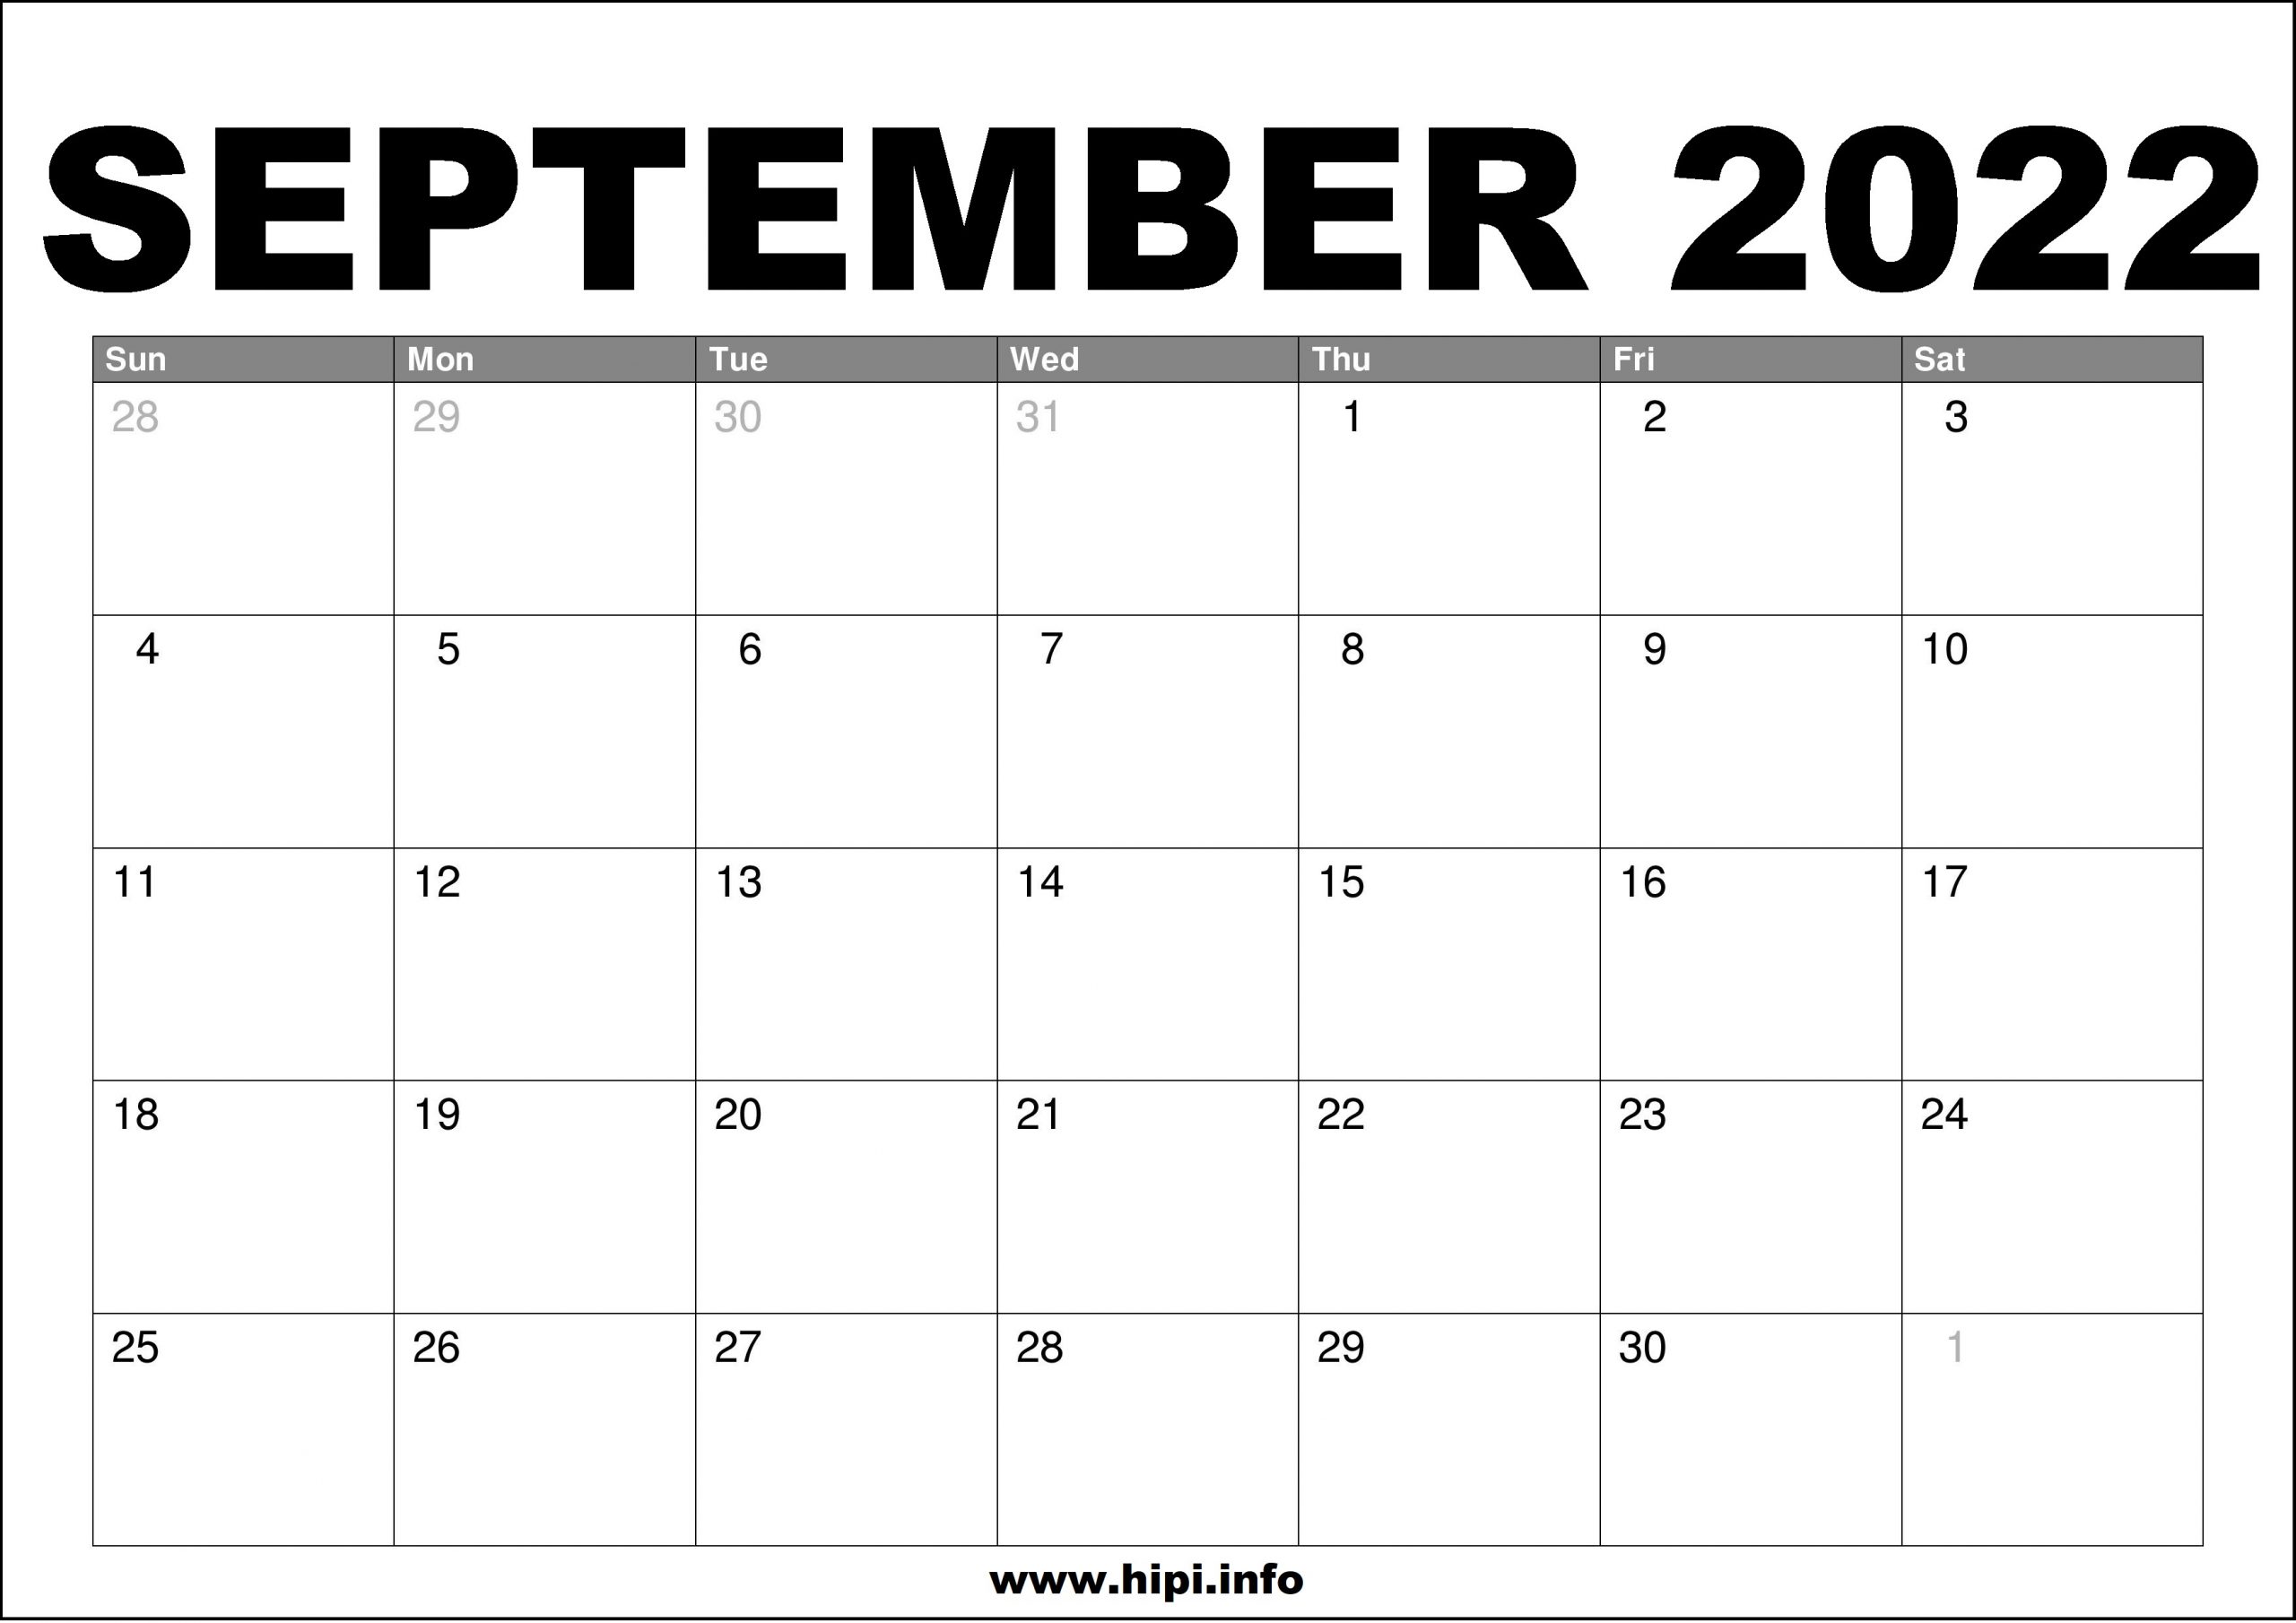 Sept 2022 Calendar Printable September 2022 Calendar Printable Free - Hipi.info | Calendars Printable  Free